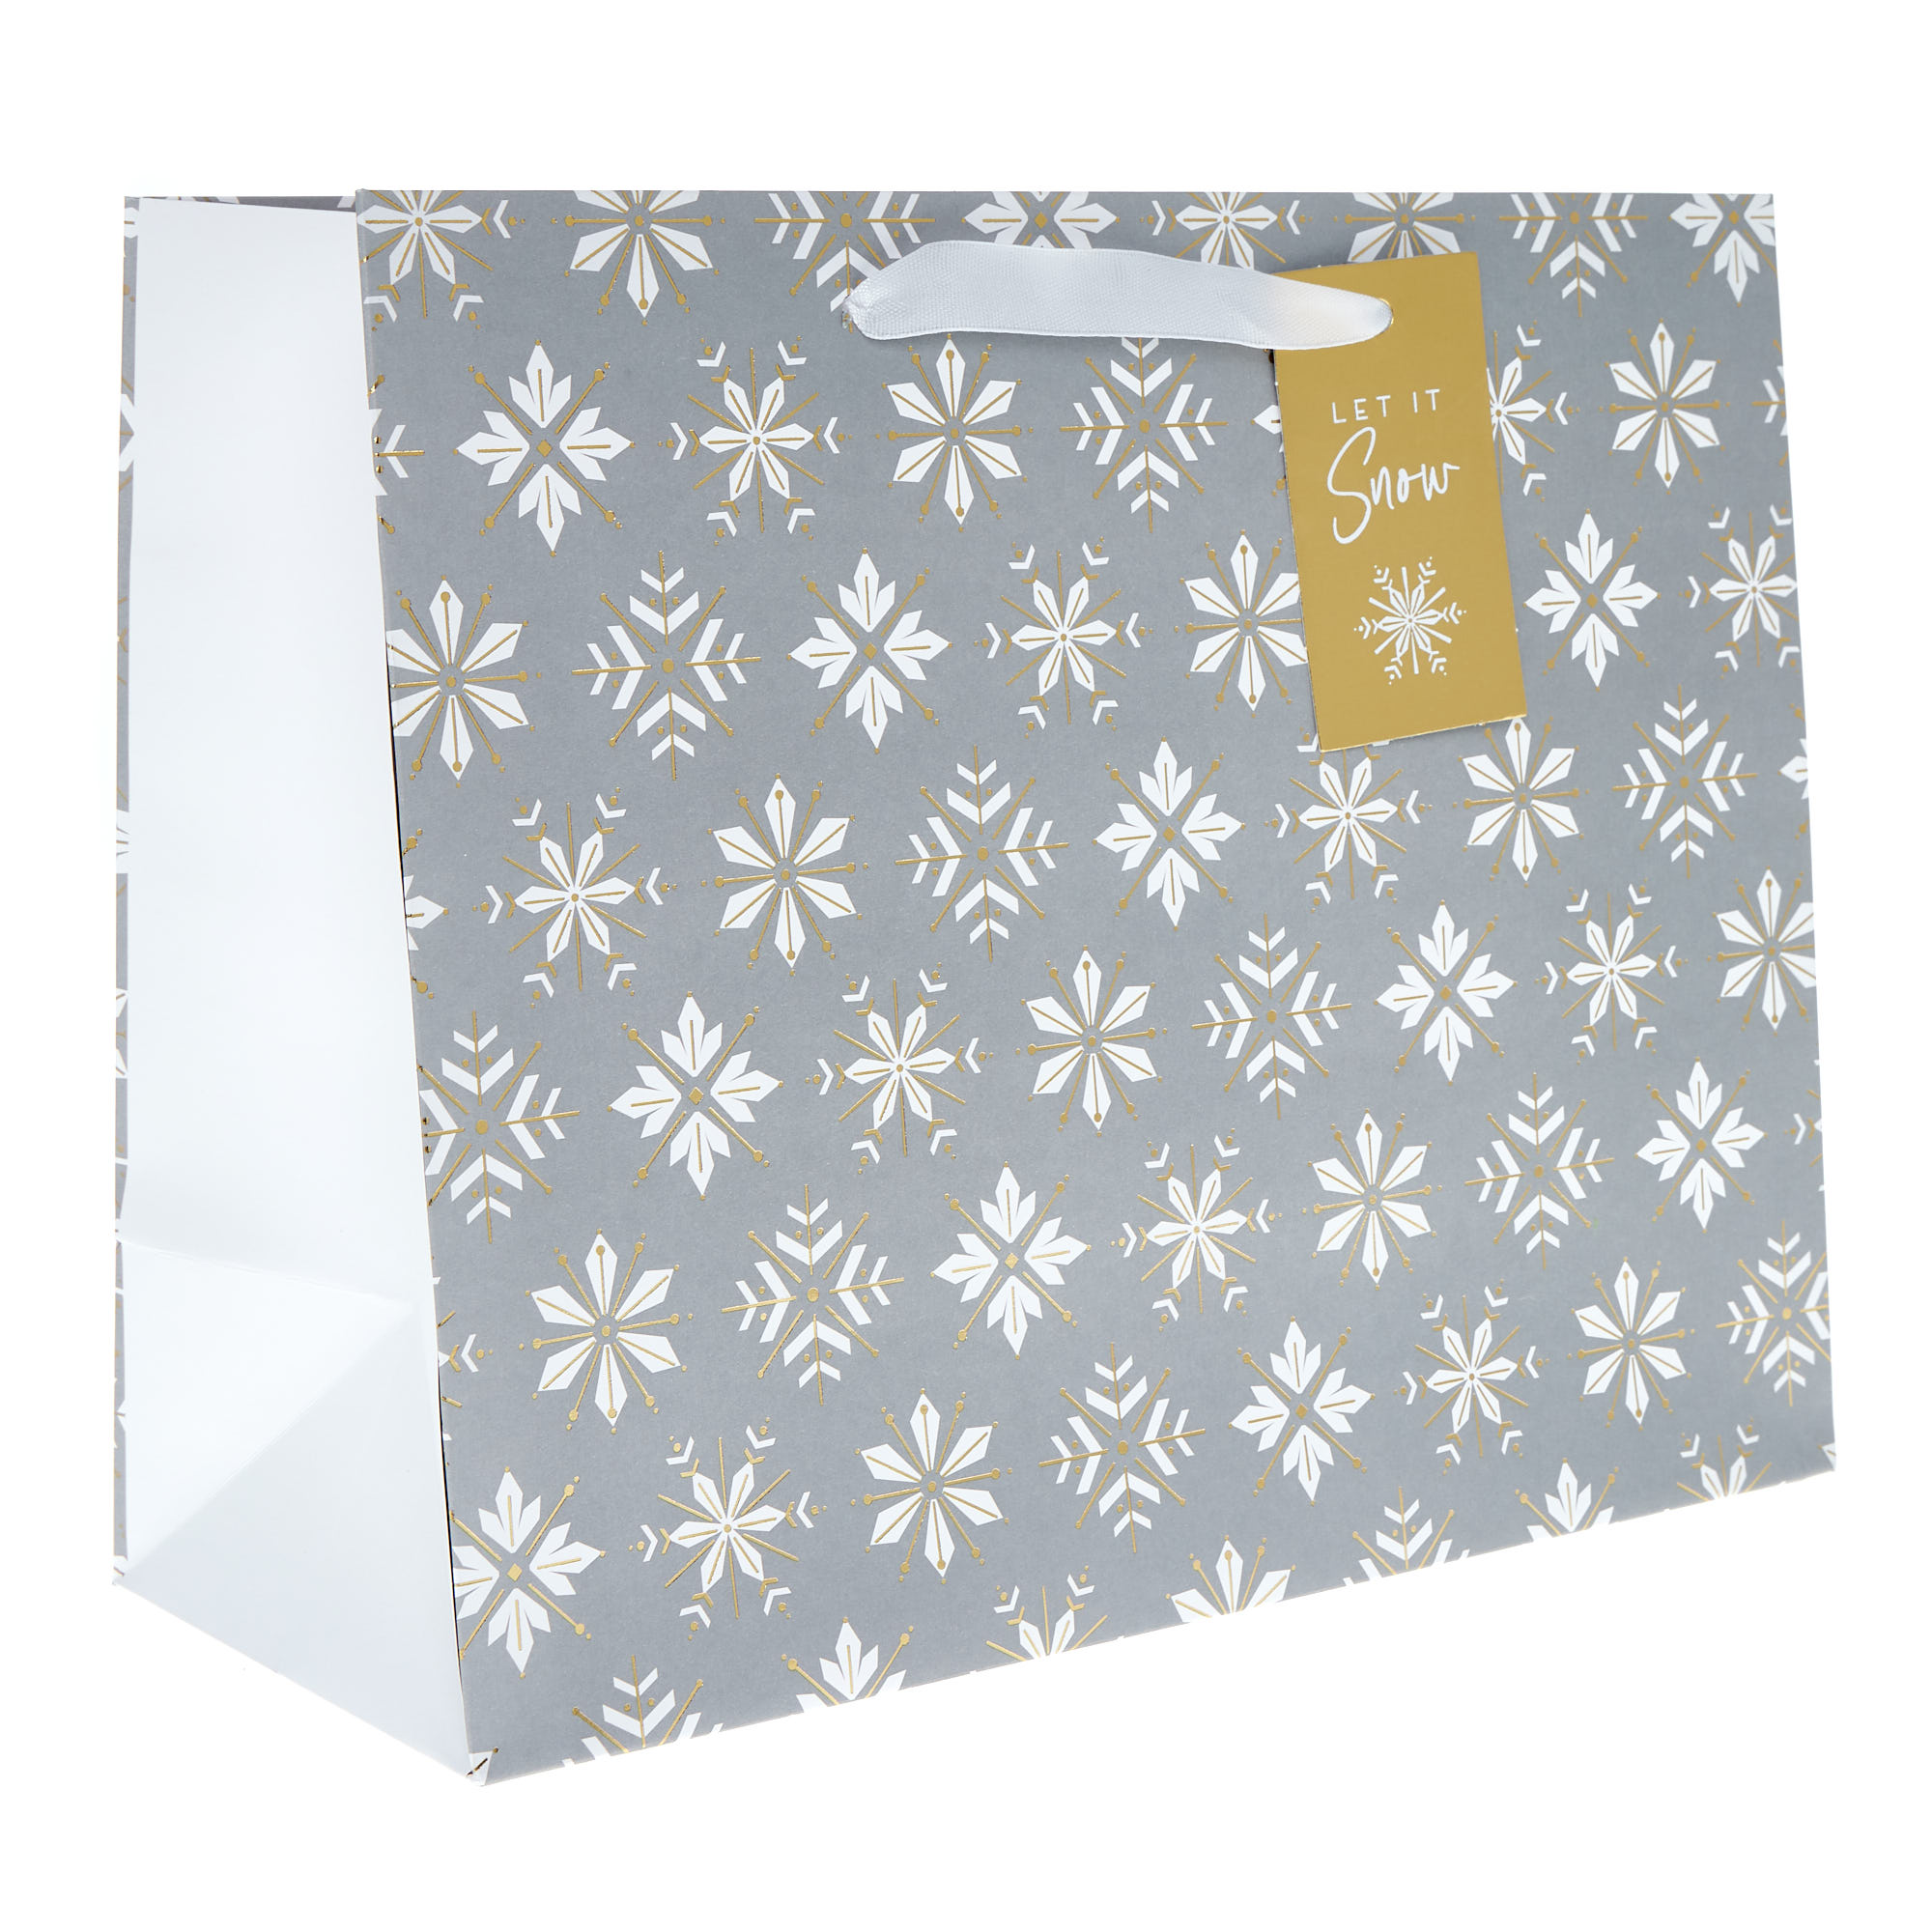 Large Landscape Patterned Snowflakes Gift Bag